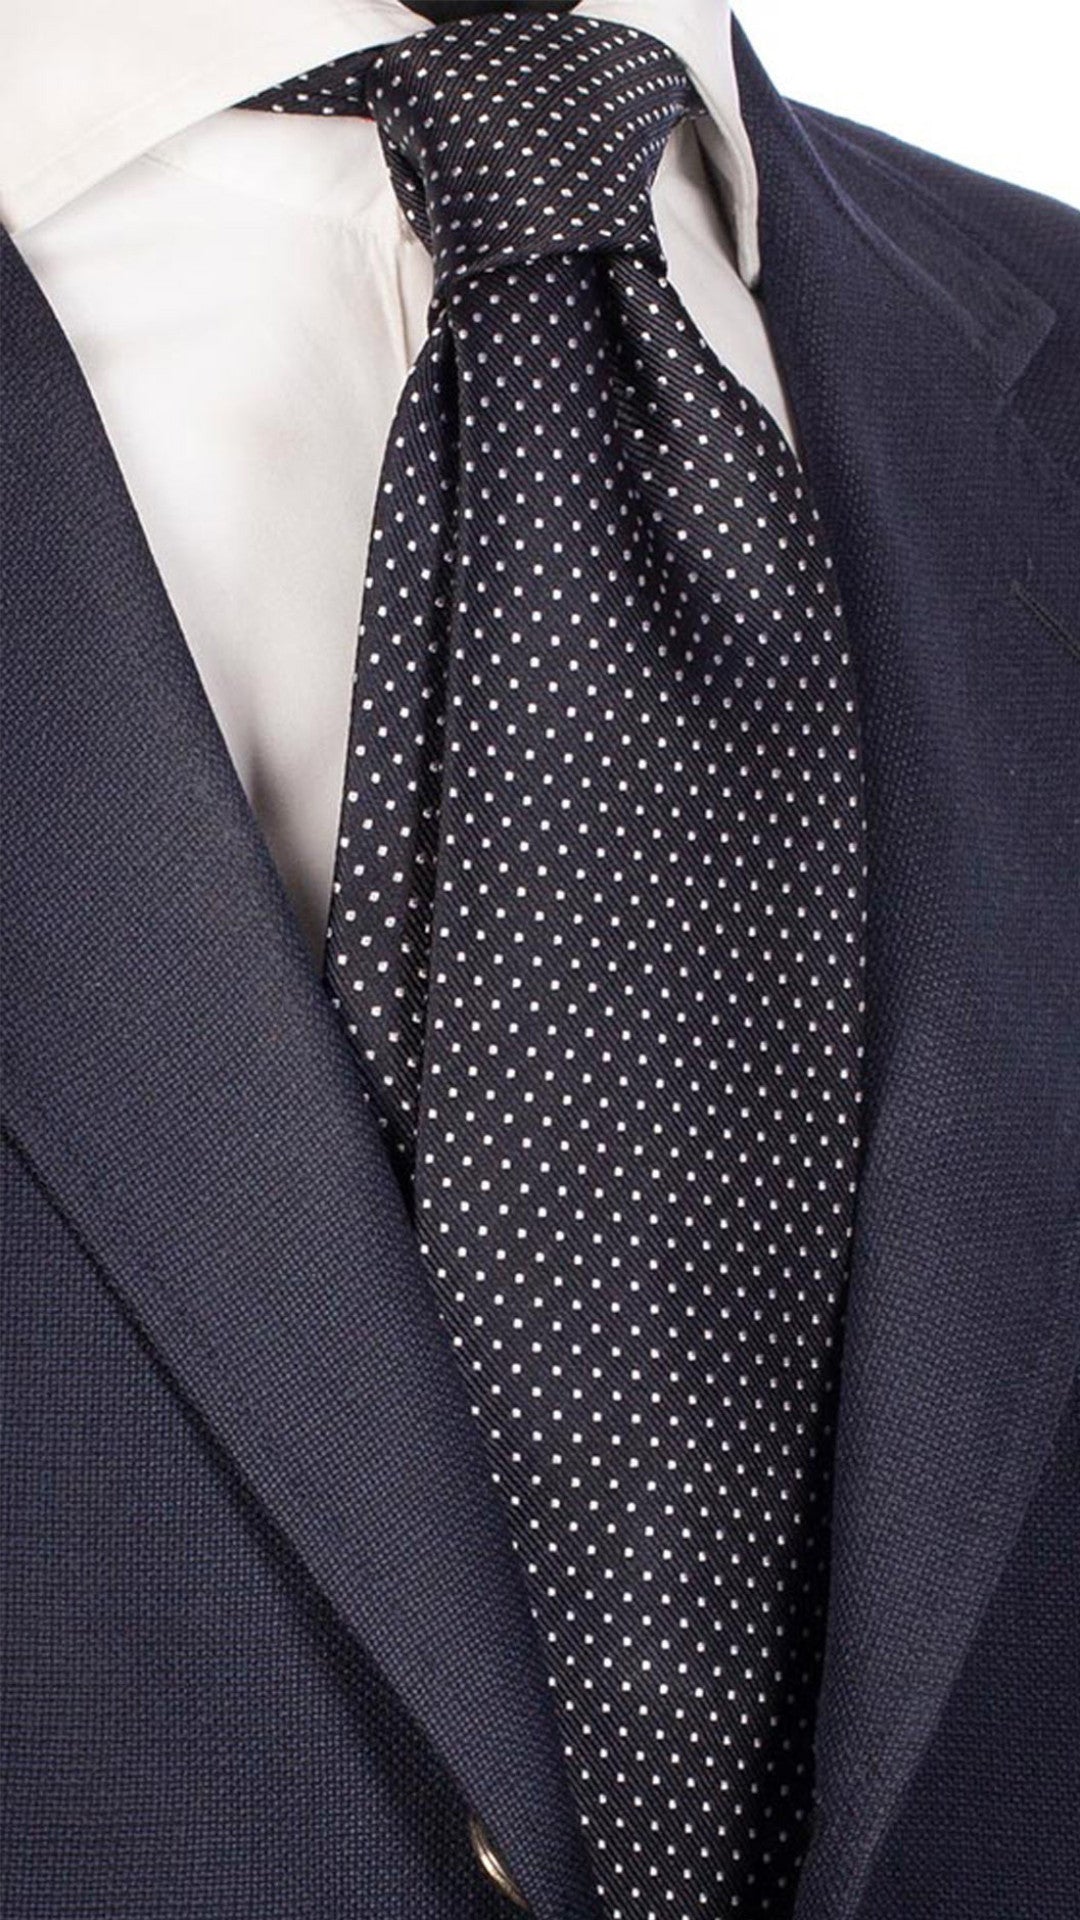 Cravatta da Cerimonia di Seta Blu Pois Bianchi CY5079 Made in Italy Graffeo Cravatte